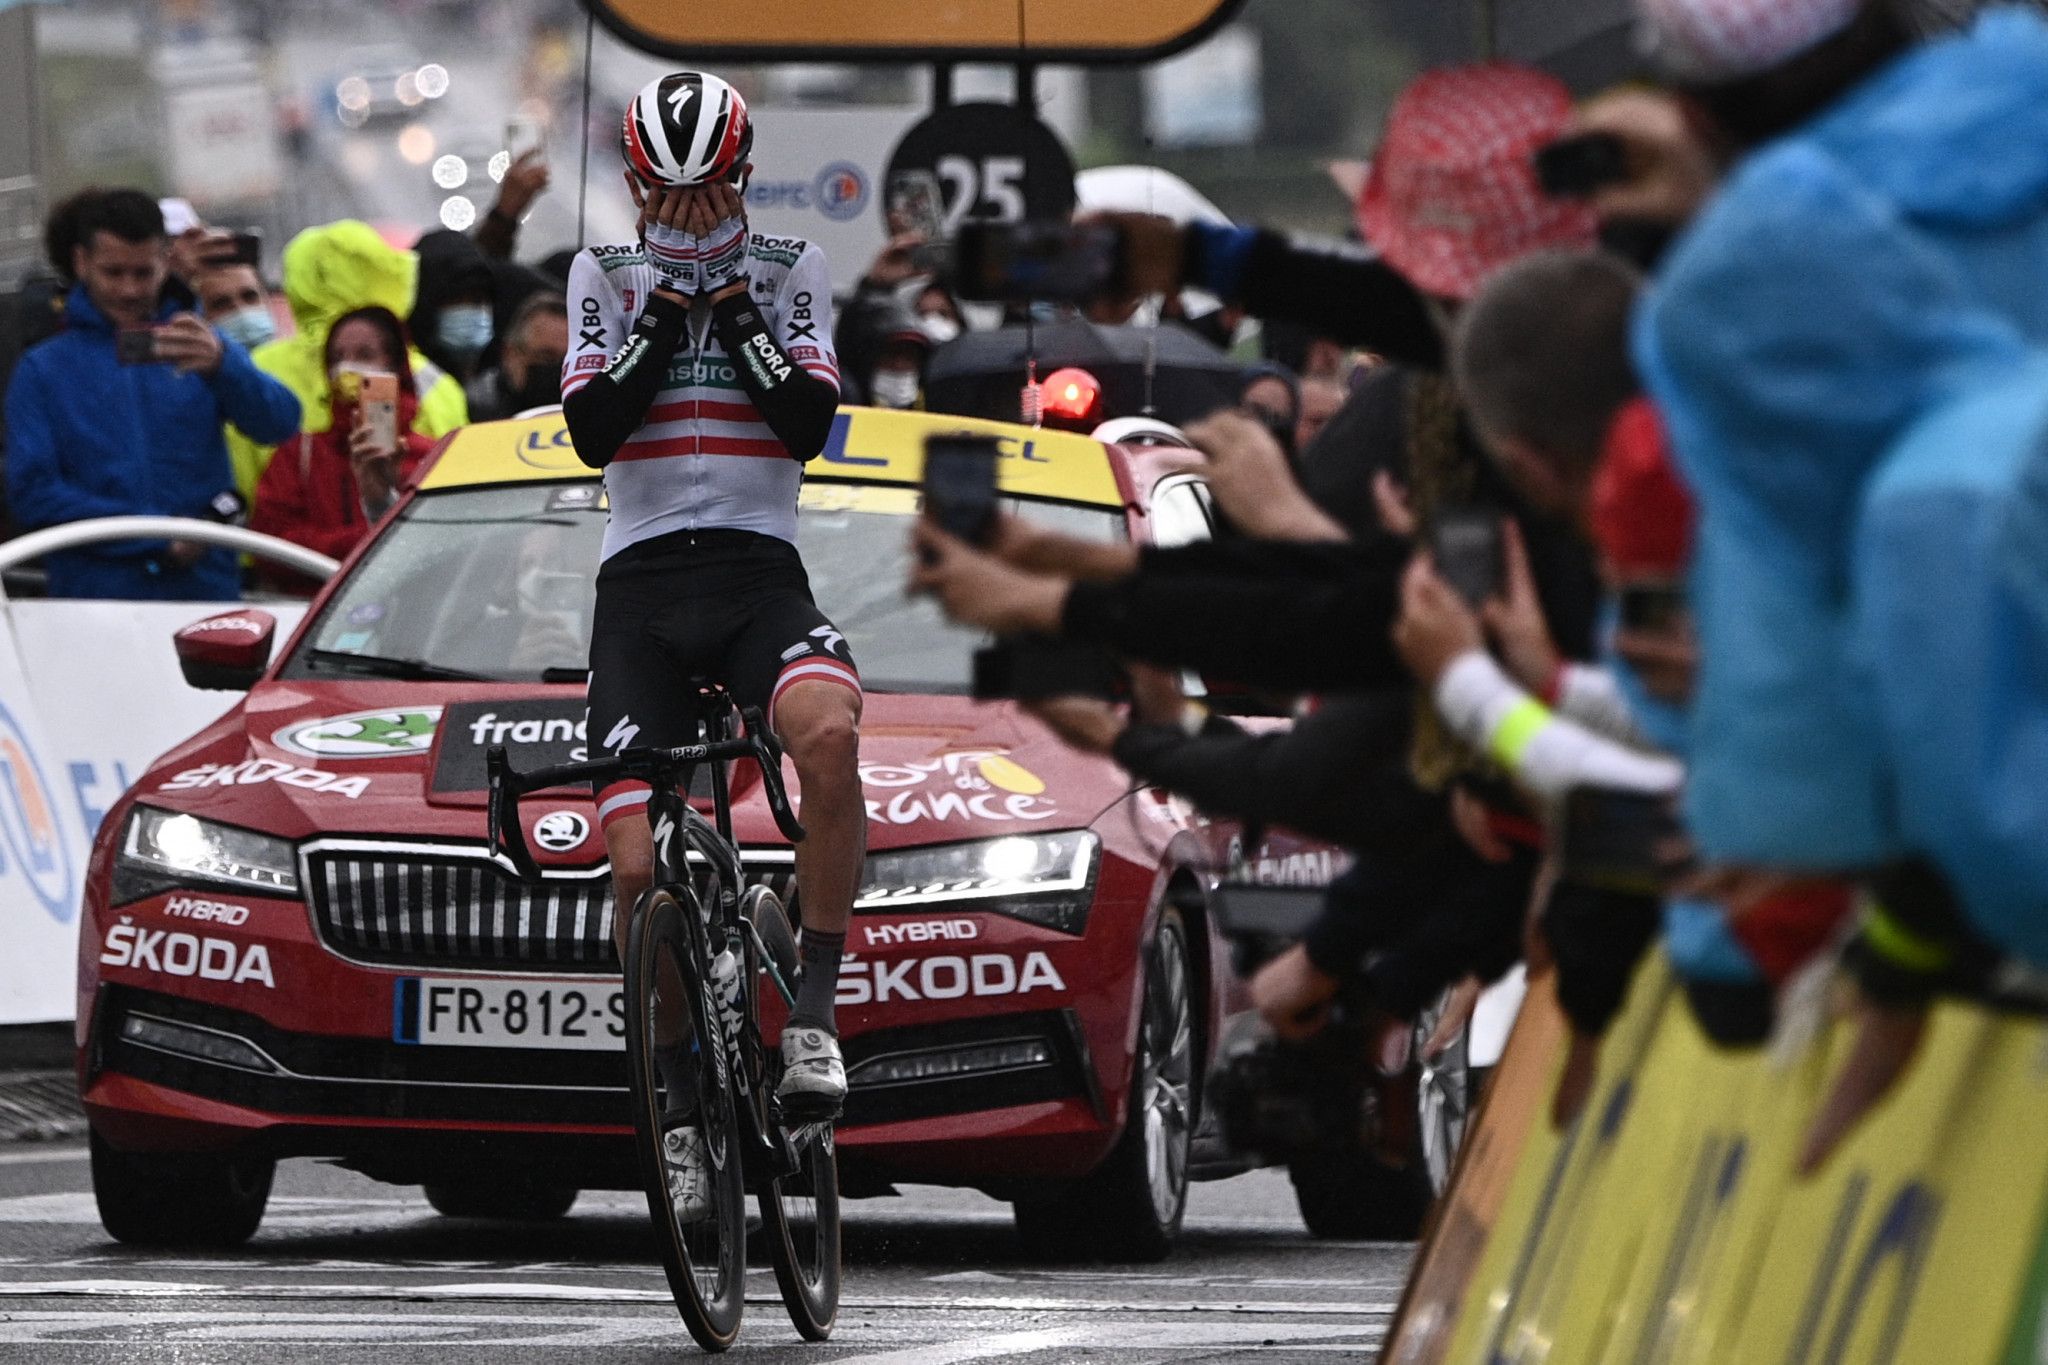 Konrad braves solo breakaway to win Tour de France stage 16